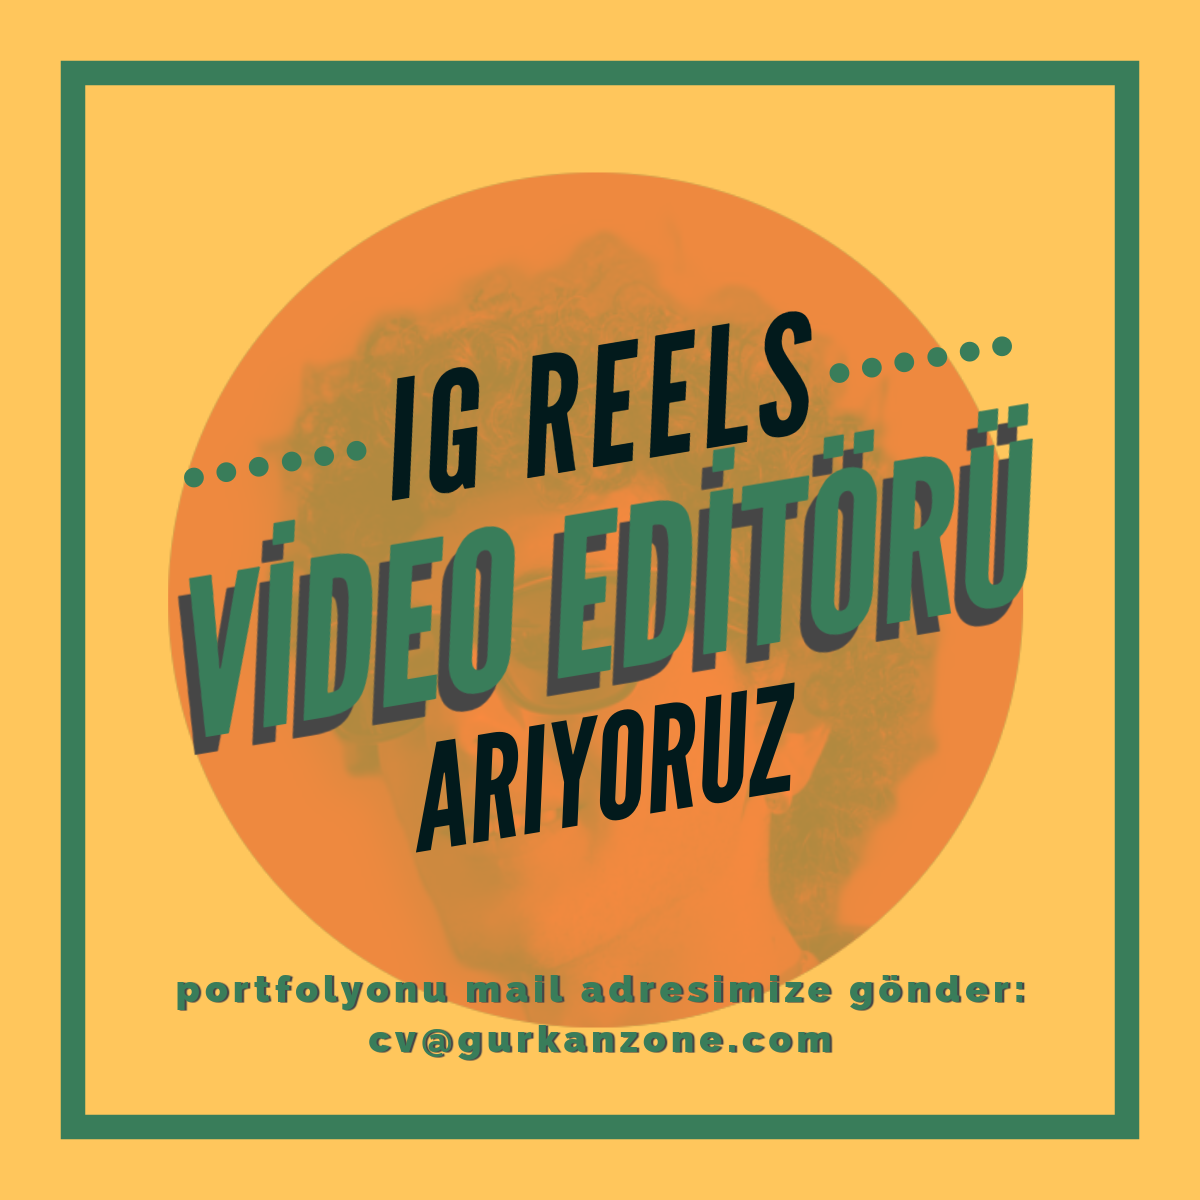 Gurkanzone, IG Reels Video Editörü arıyor!